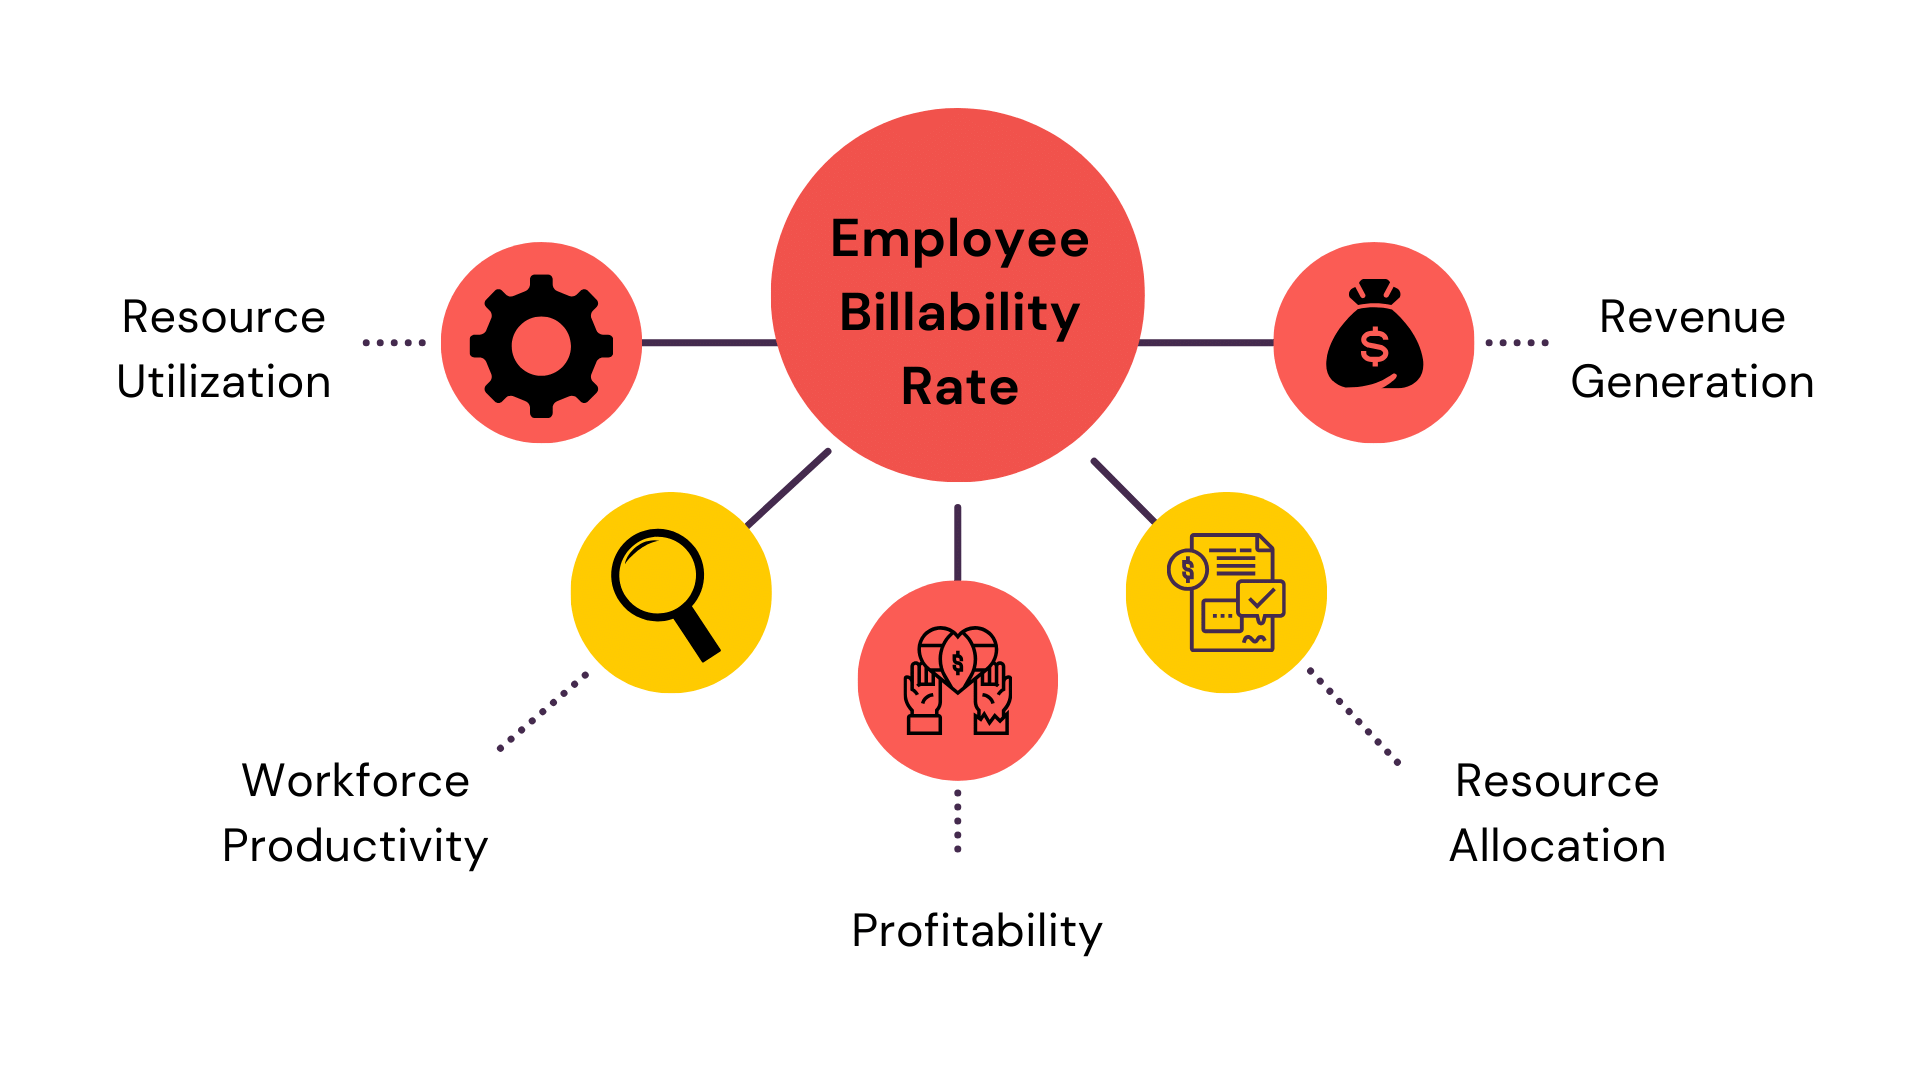 Employee Billability Rate